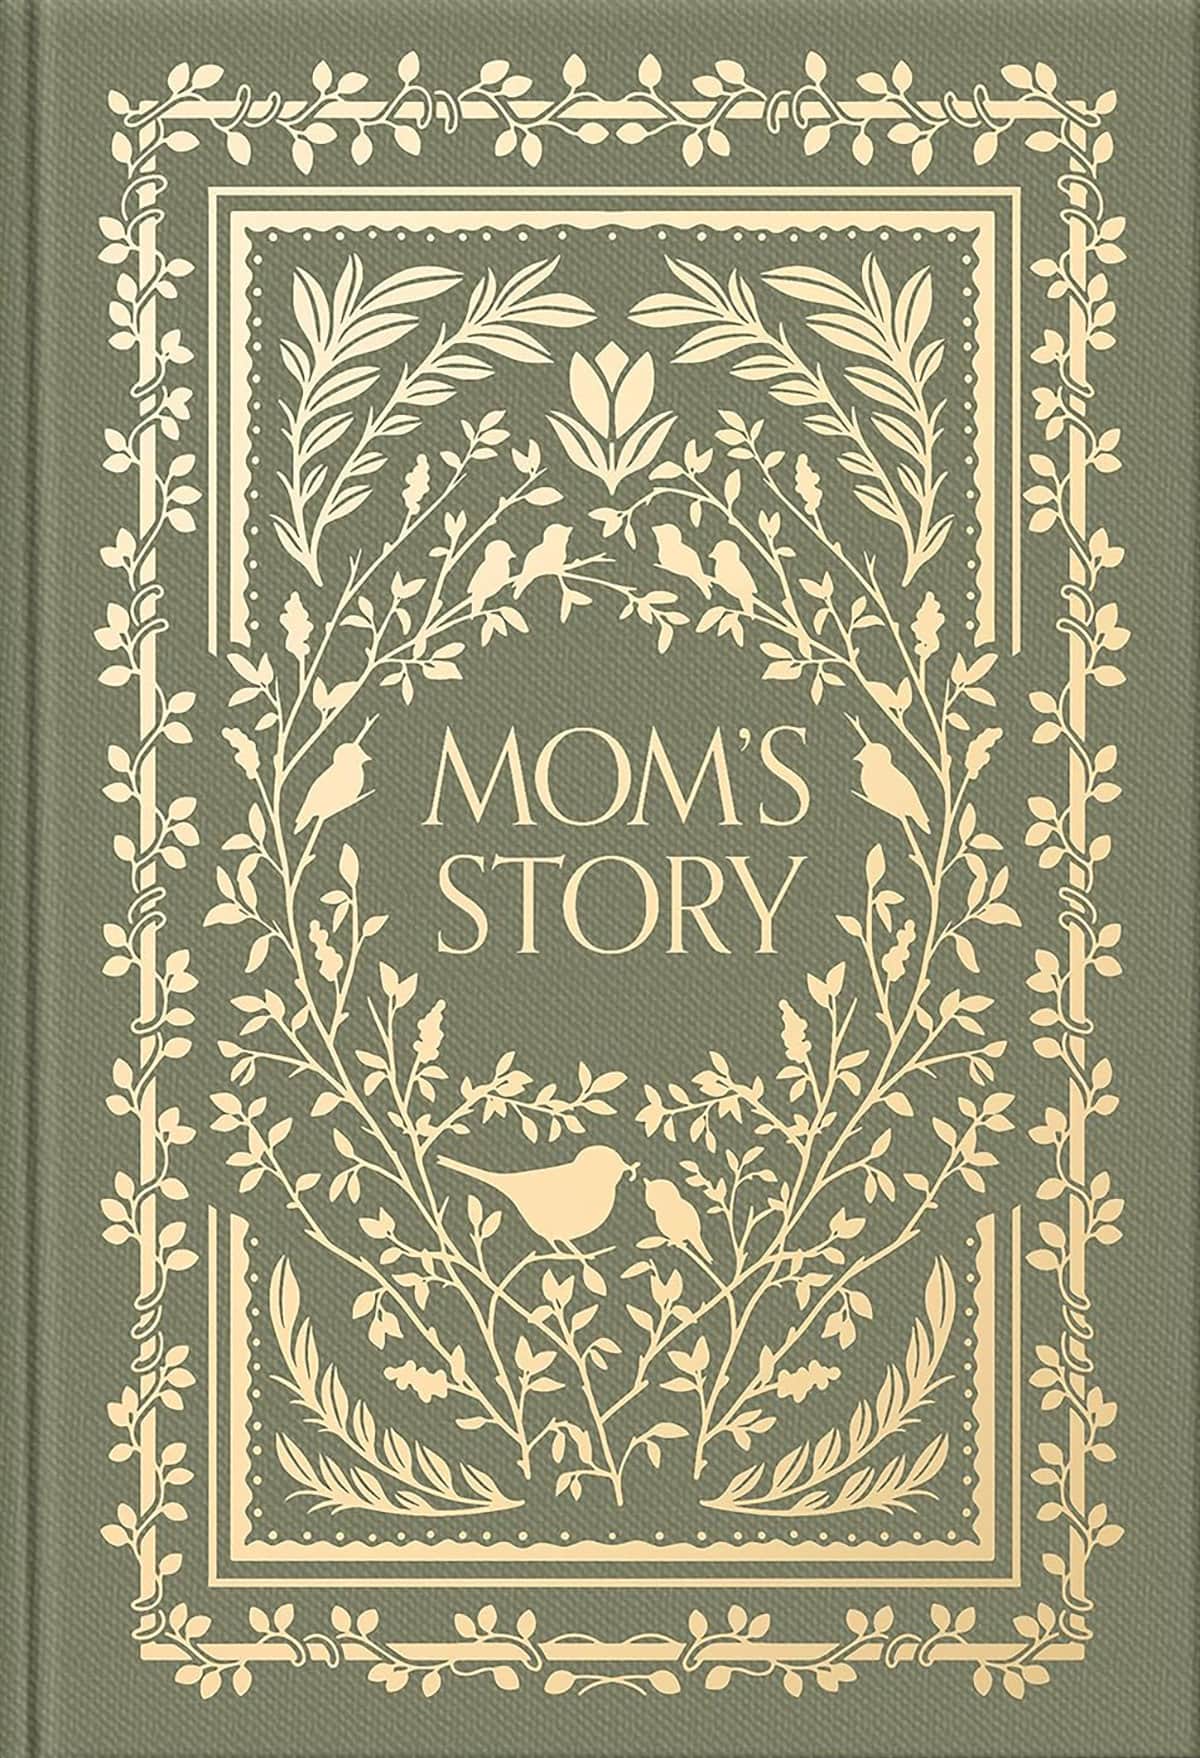 Daily-Mom-Parent-Portal-Good-Adult-Books